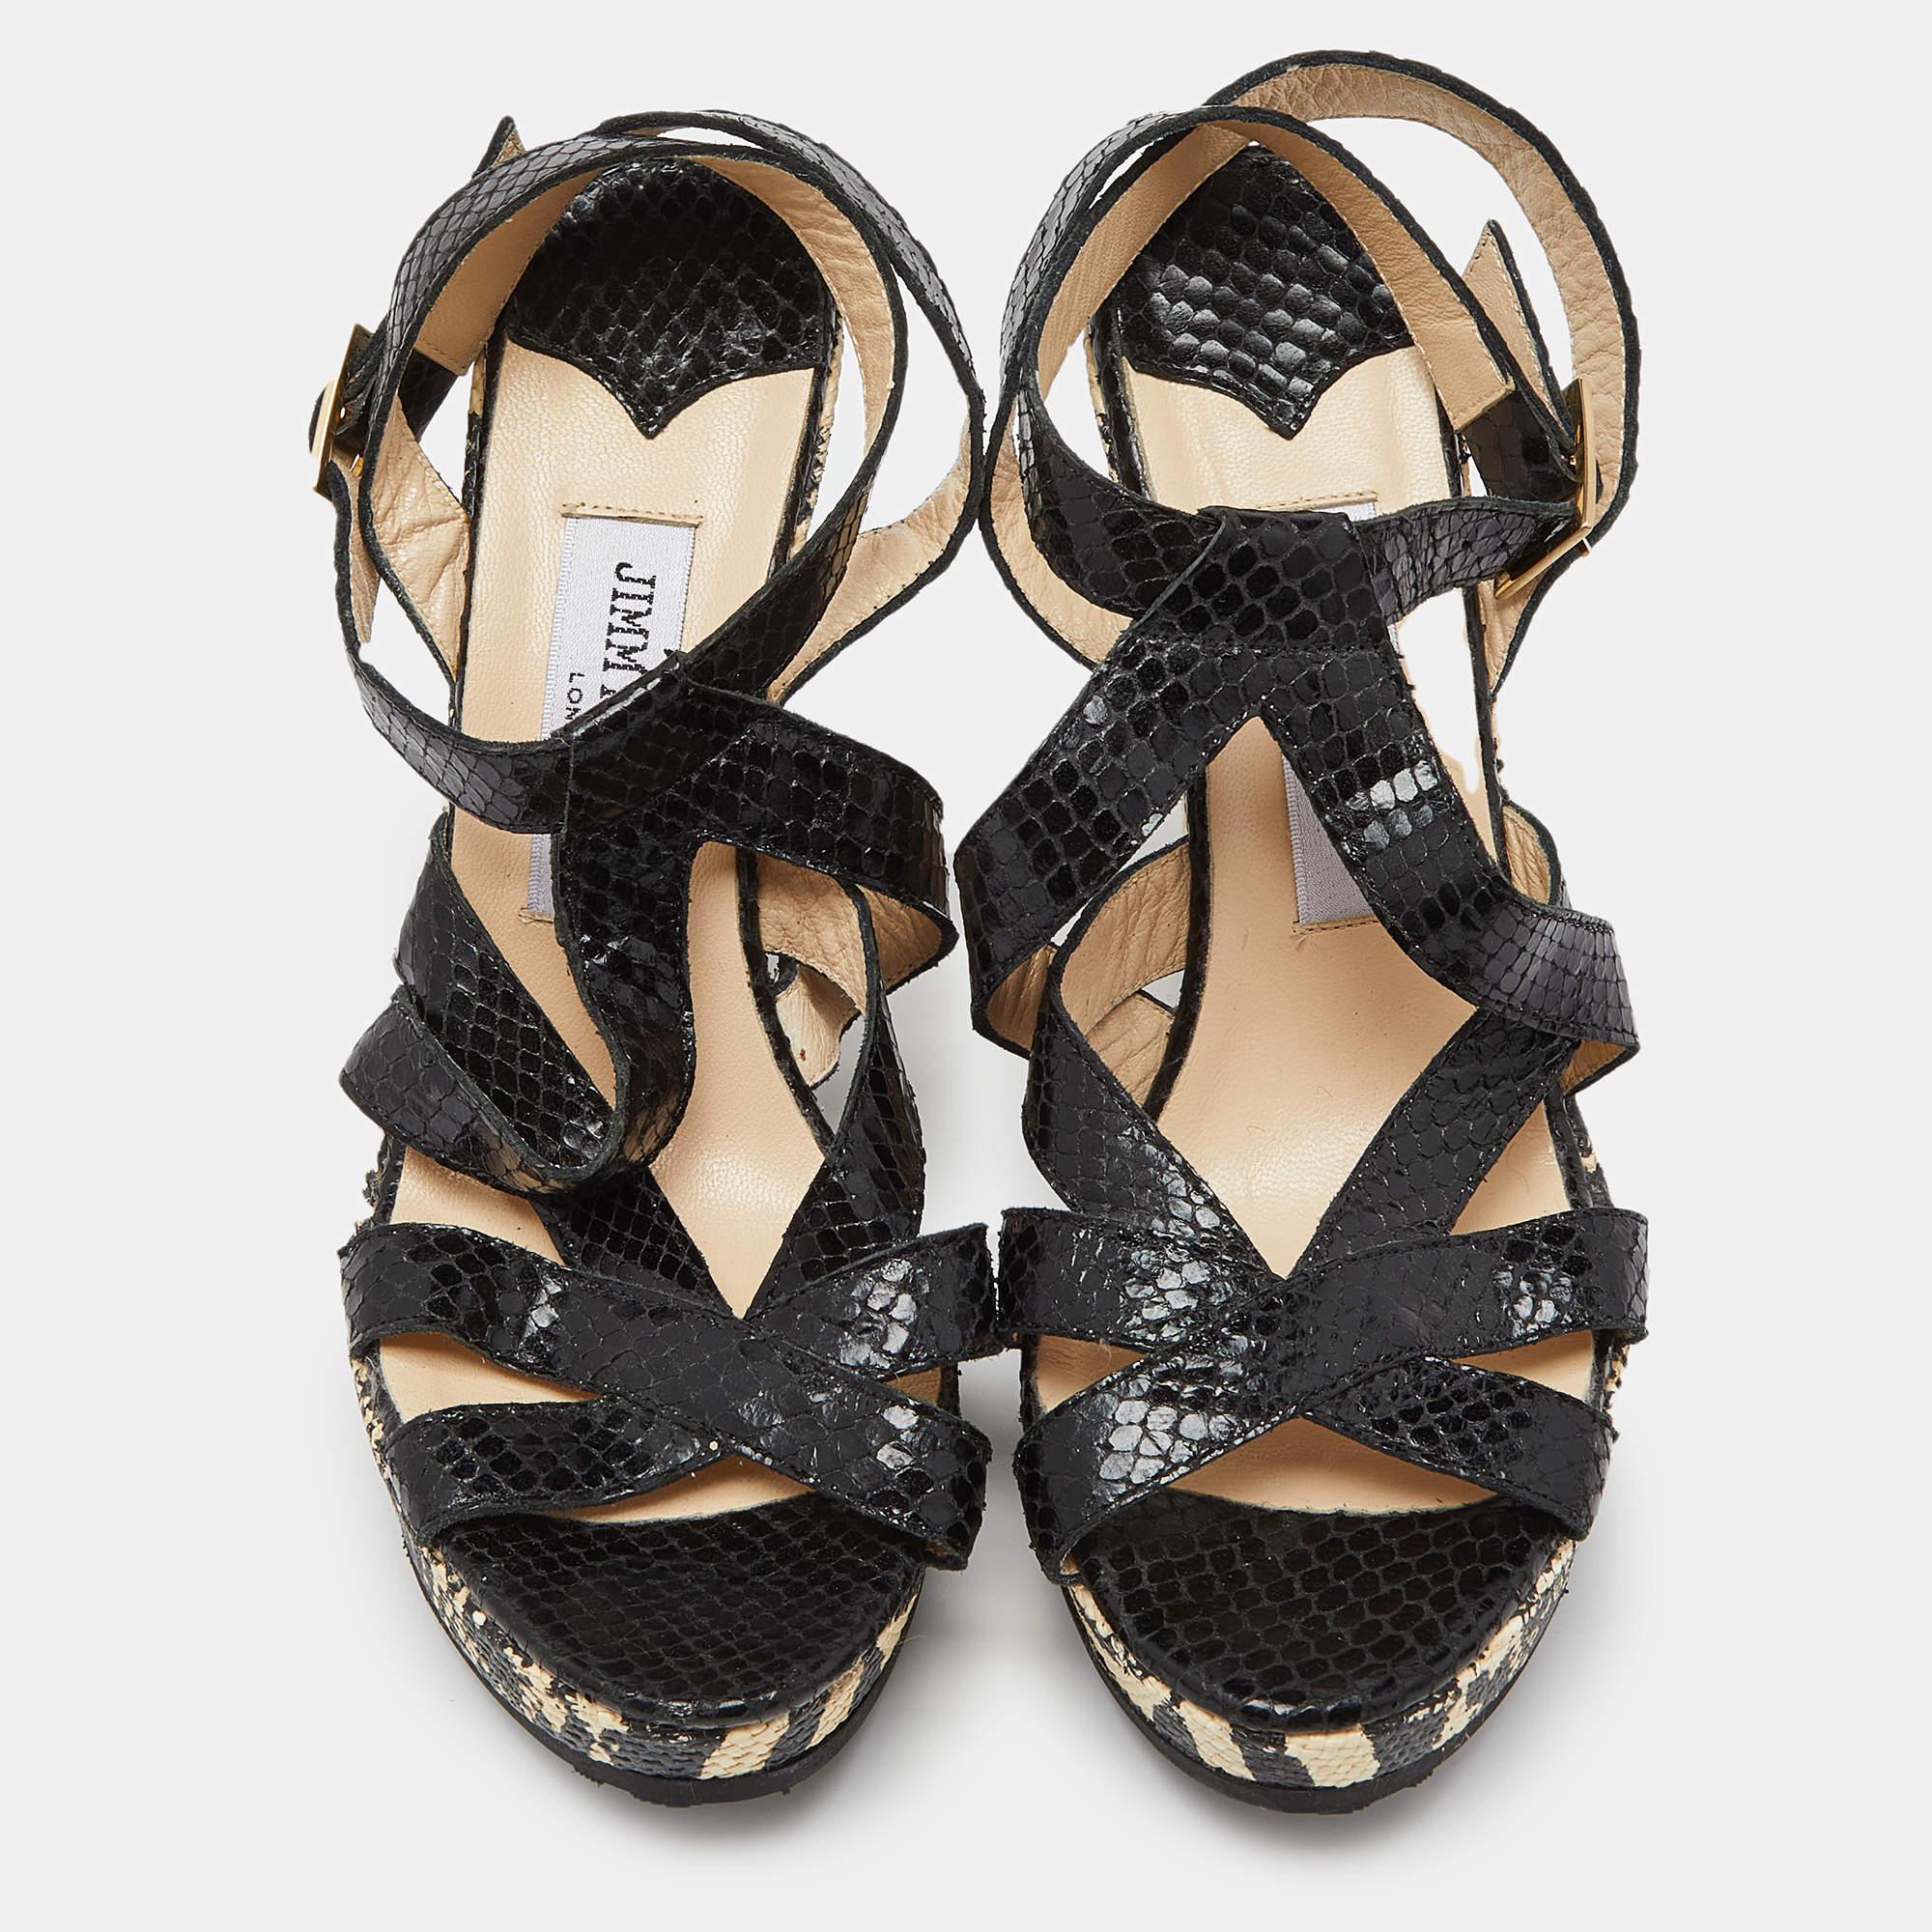 Jimmy Choo Black Snakeskin Platform Wedge Sandals Size 38 In New Condition For Sale In Dubai, Al Qouz 2